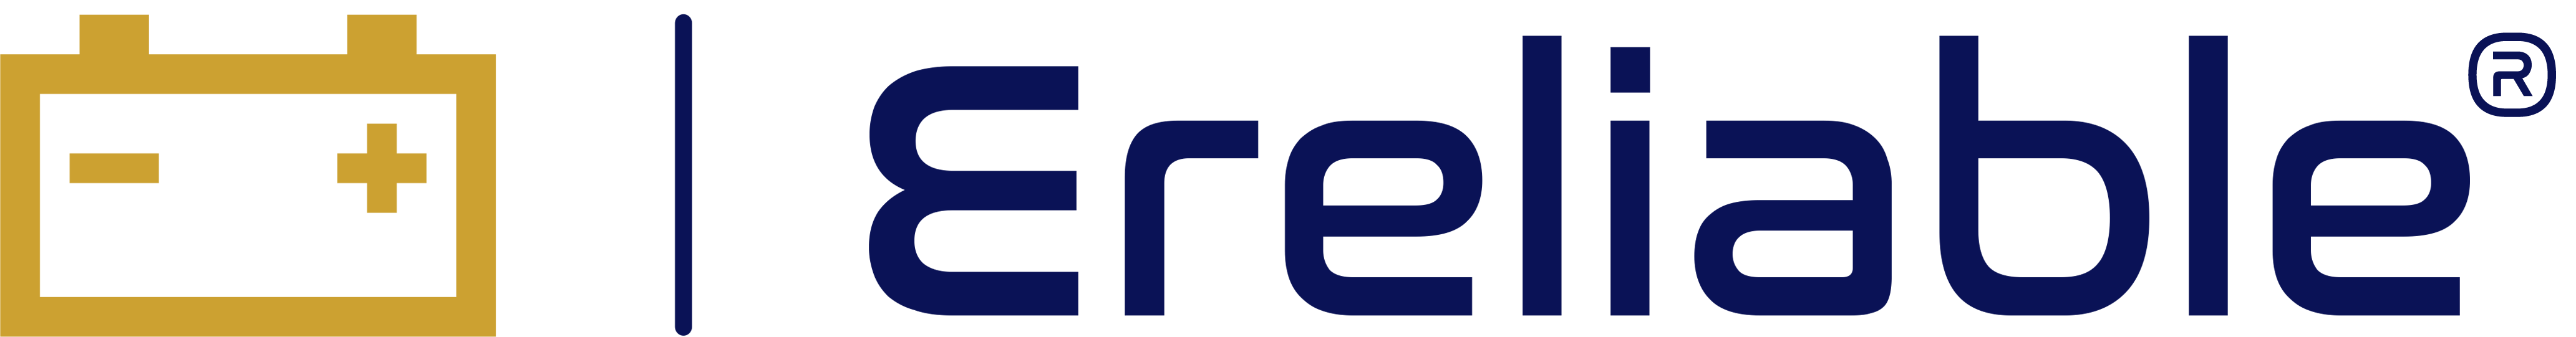 Ereliable Logo im Banner